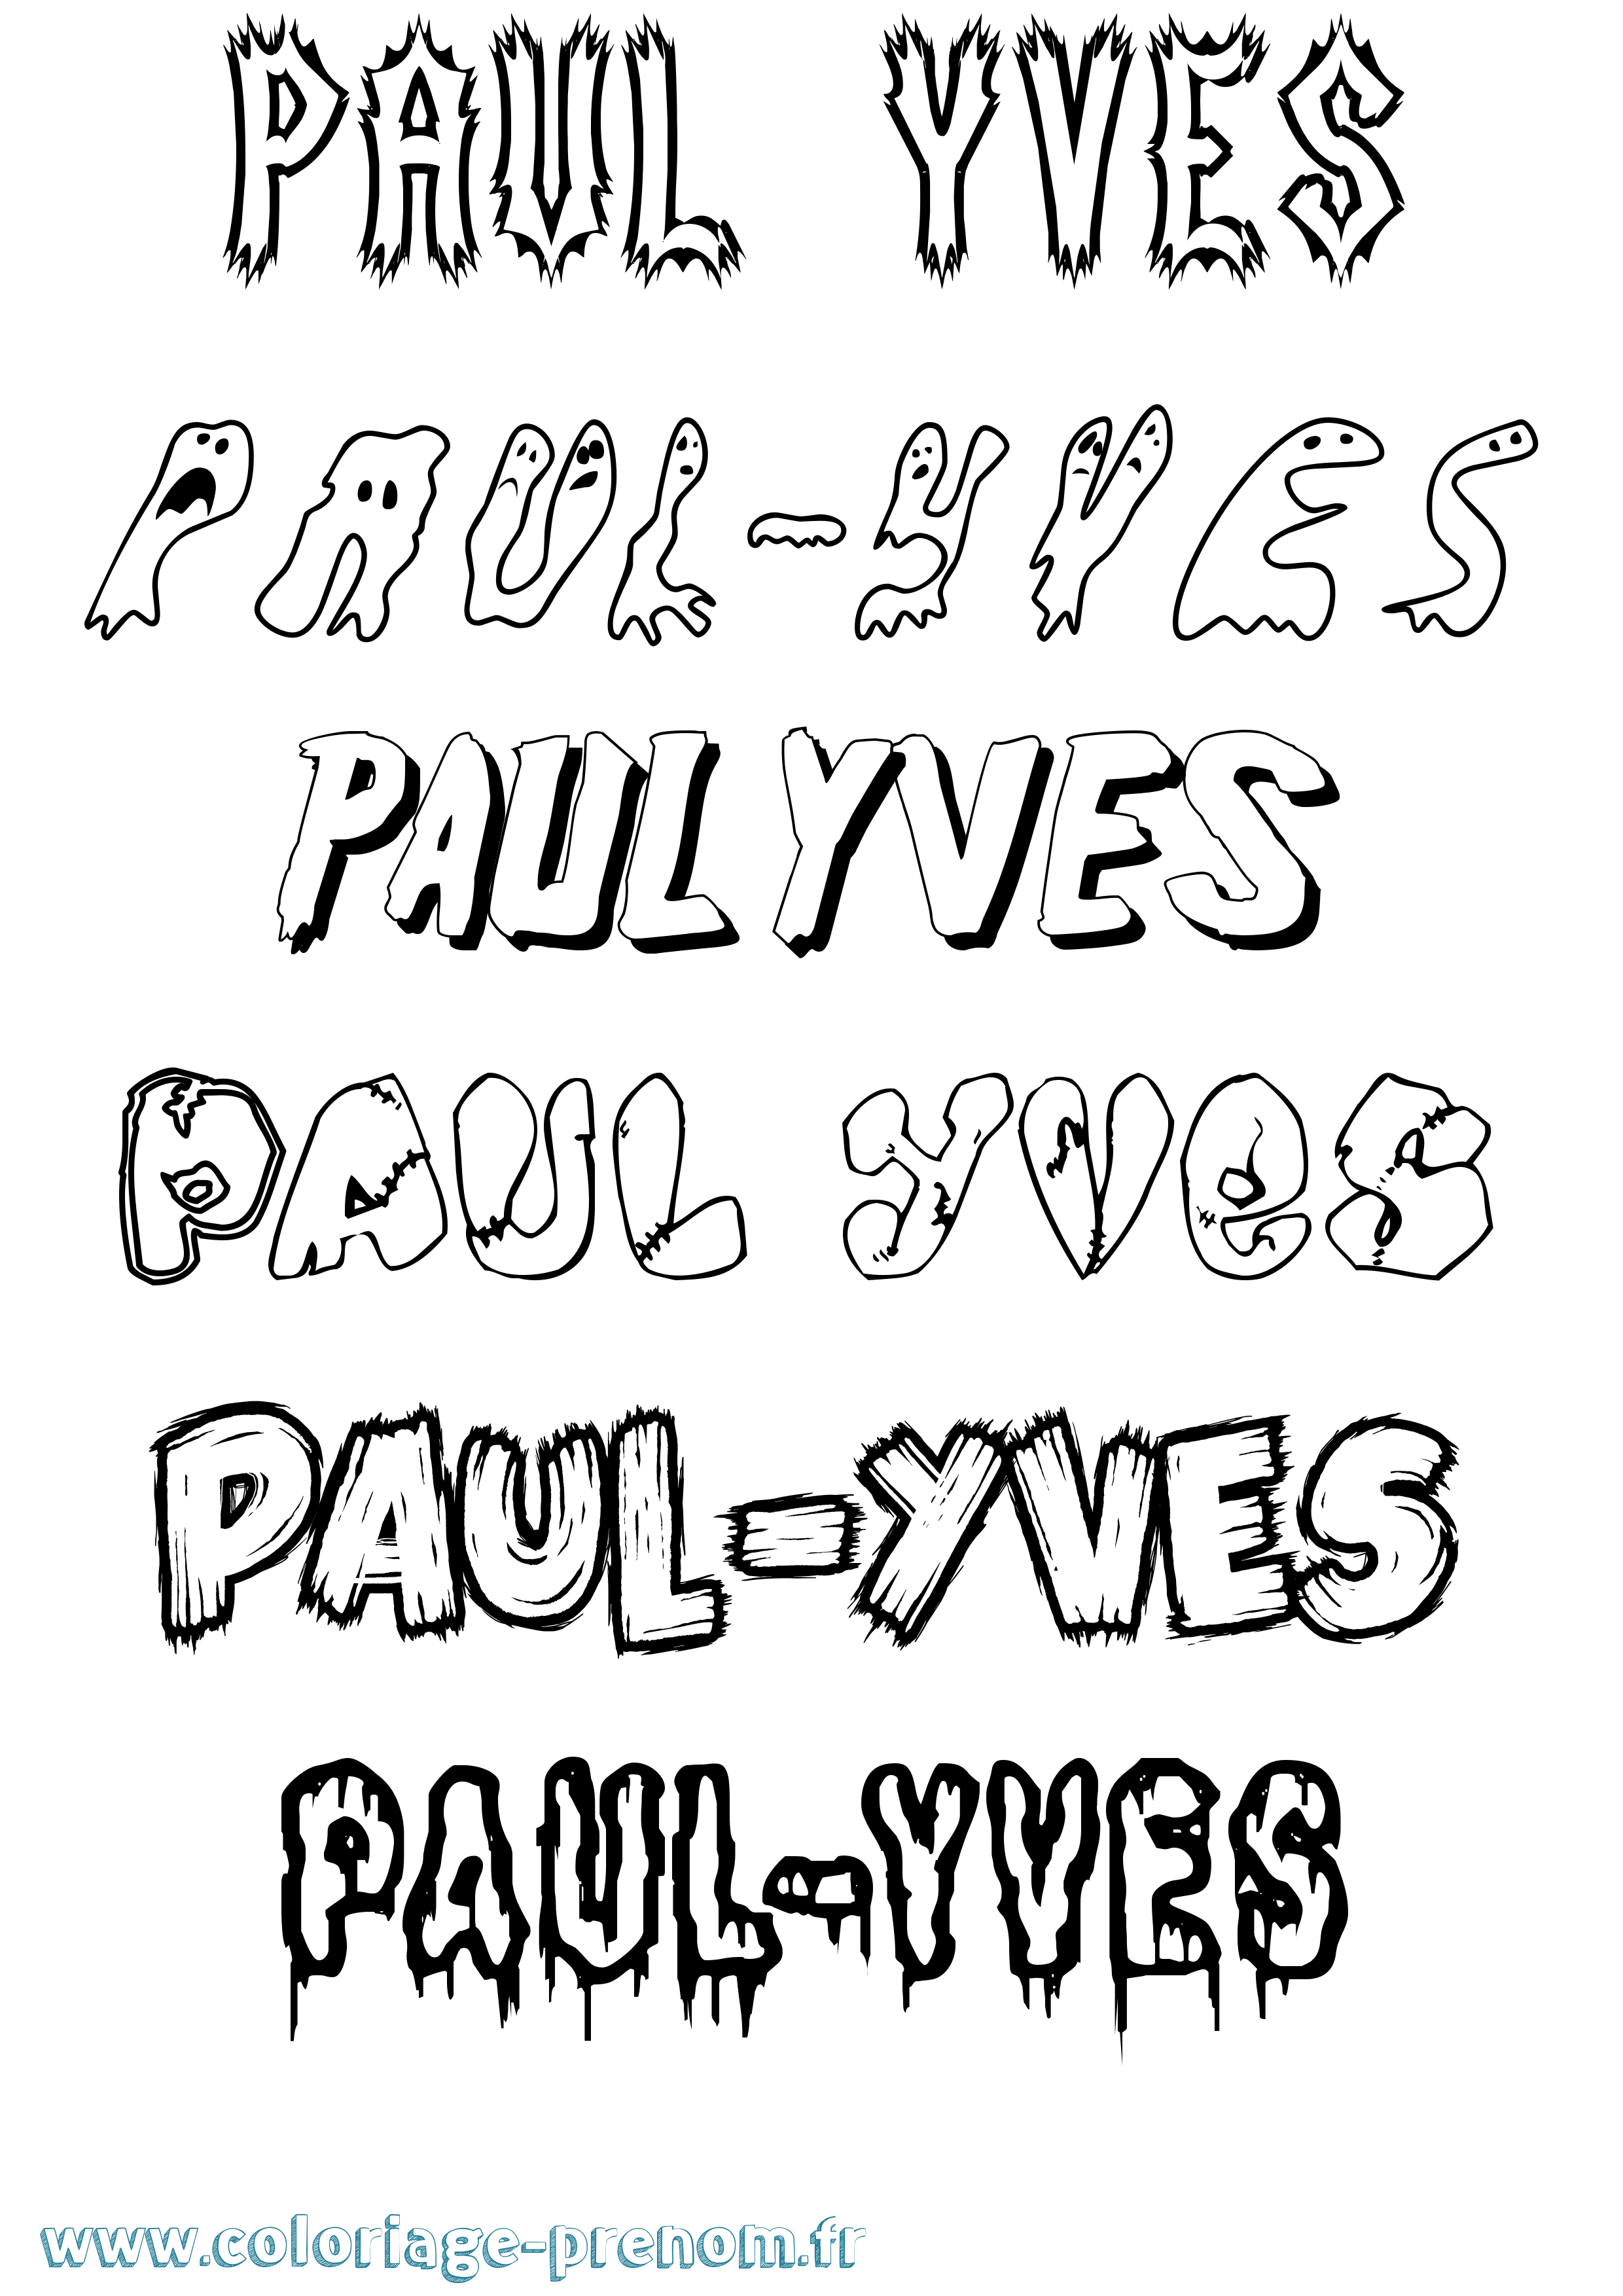 Coloriage prénom Paul-Yves Frisson